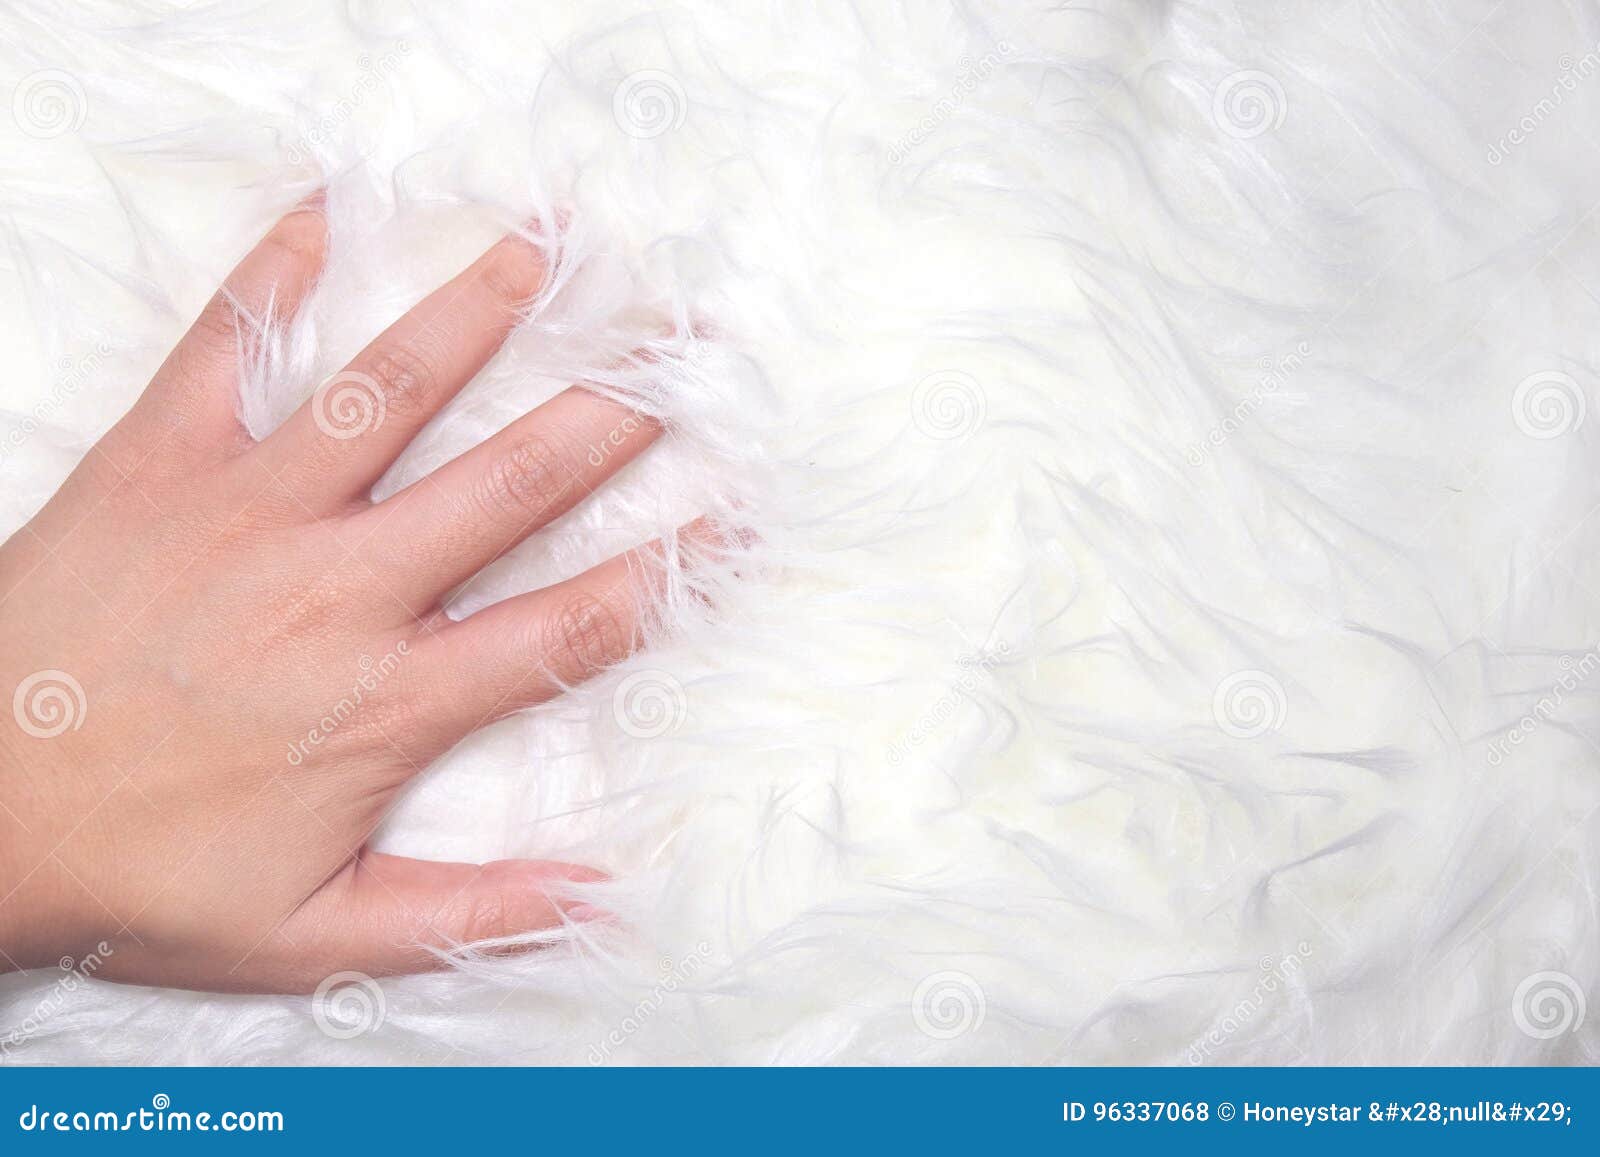 a hand touch white fur